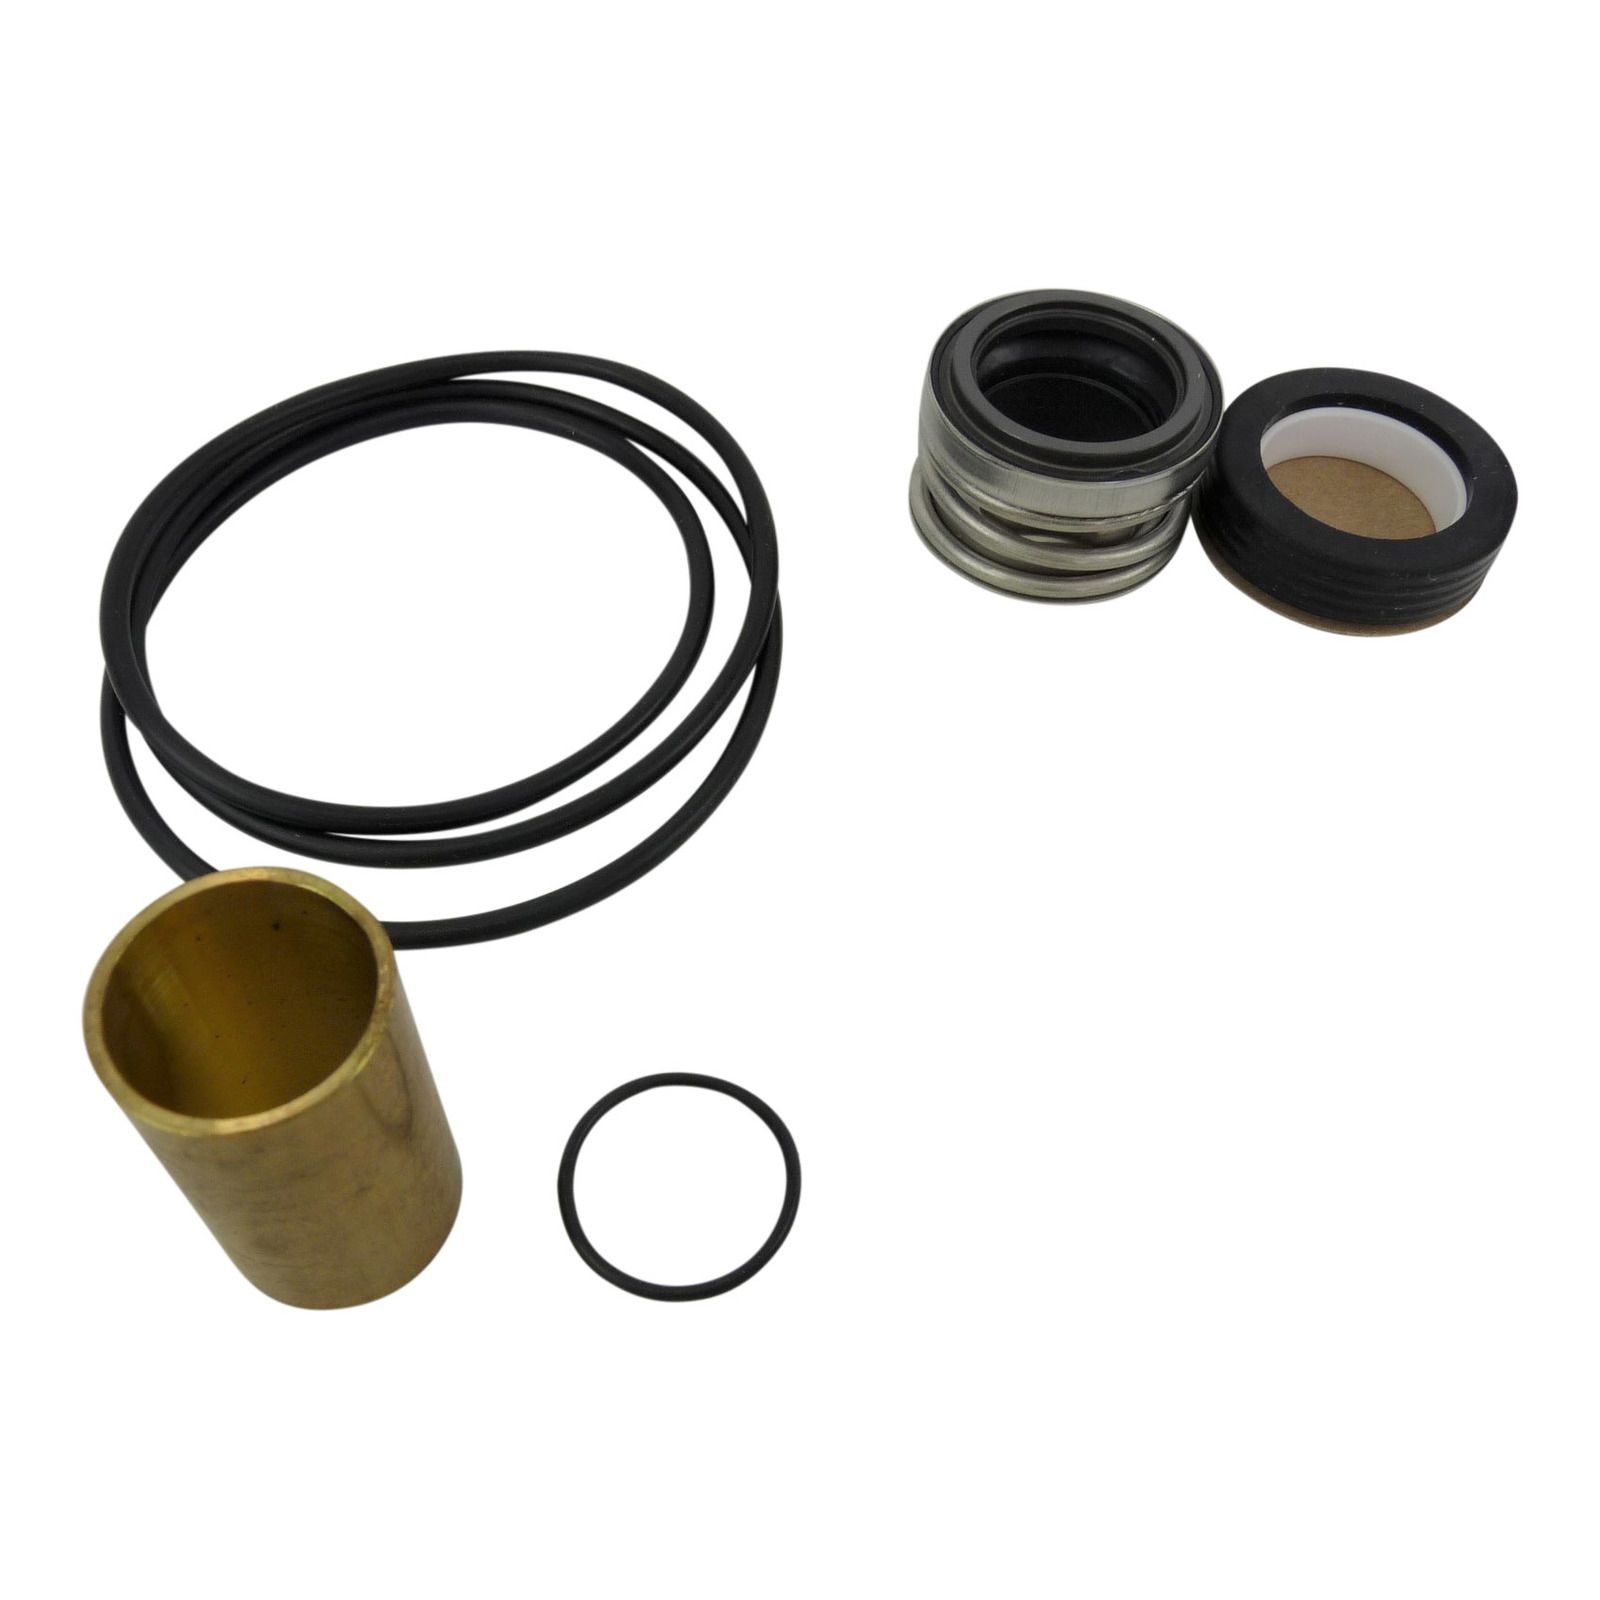 Onga Genuine 18 Series 185 Pump Mechanical Seal Kit 1" Seal & O-rings 800871K